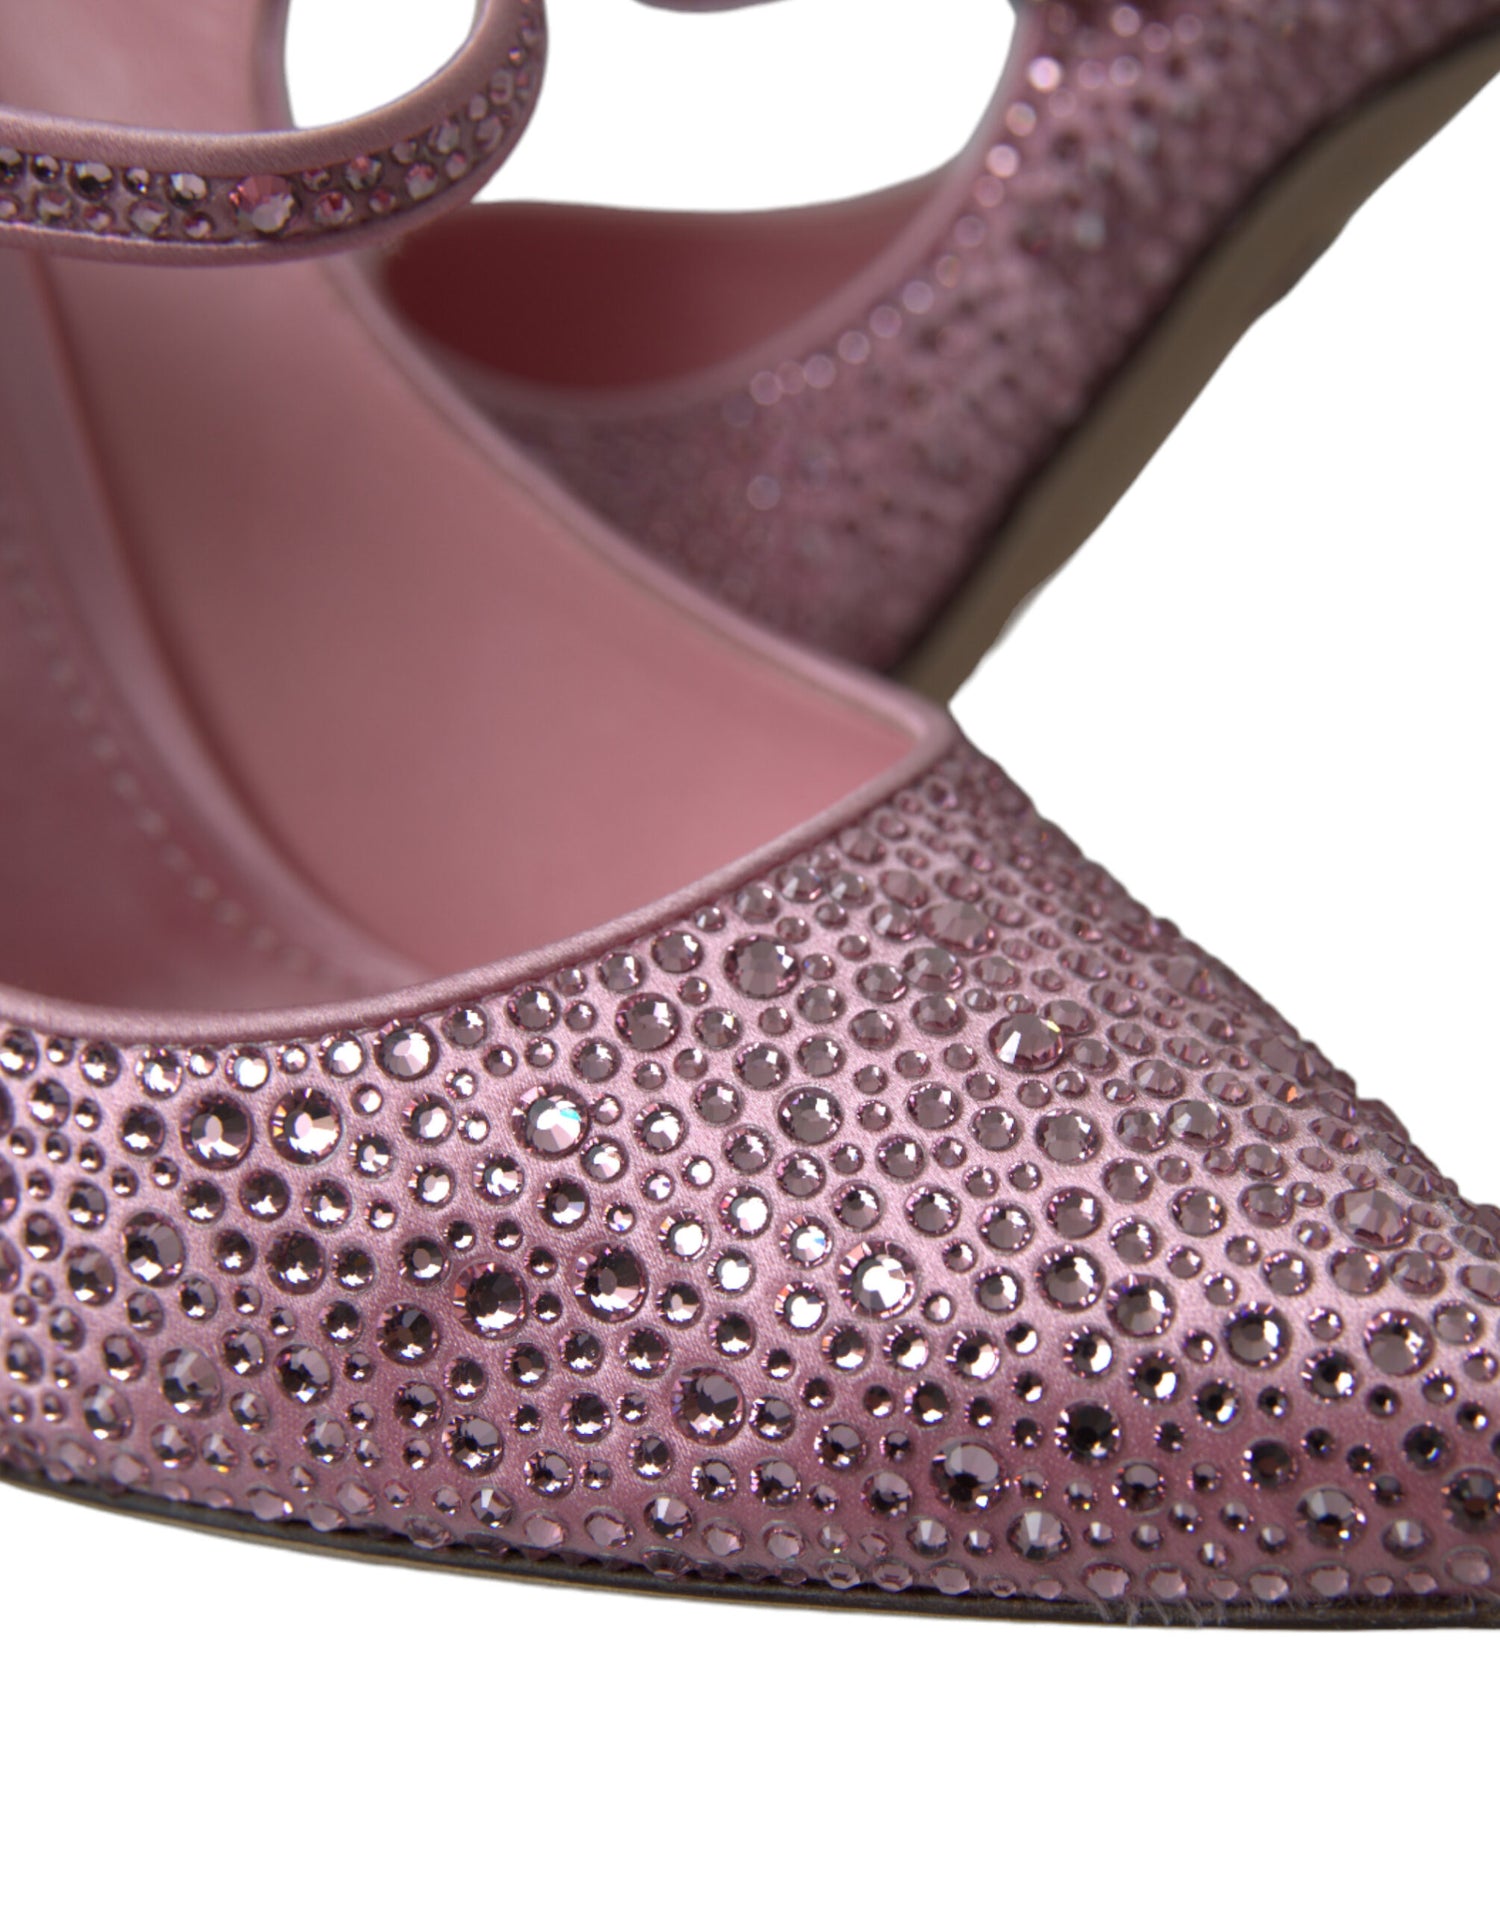 Dolce & Gabbana Pink Strass Crystal Heels Pumps Shoes - DEA STILOSA MILANO